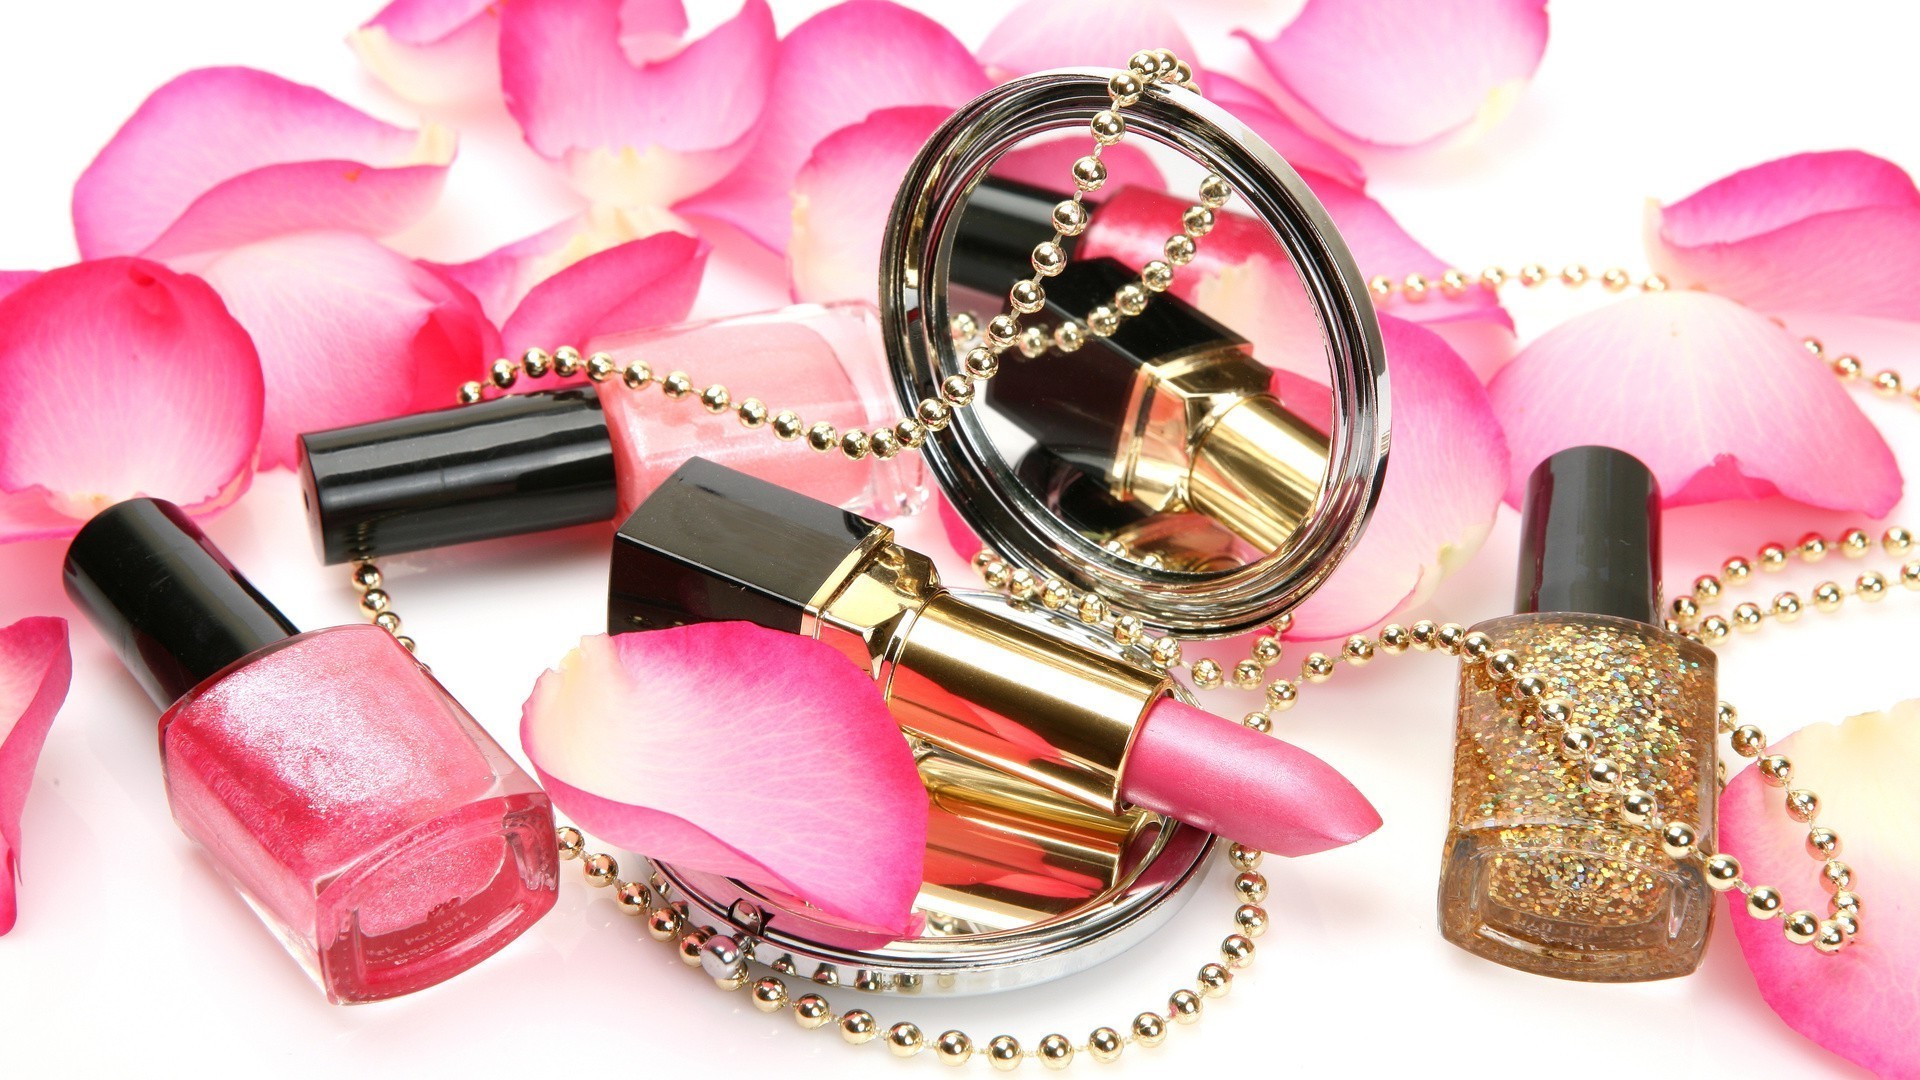 cosmetics wallpaper,pink,cosmetics,product,lipstick,fashion accessory